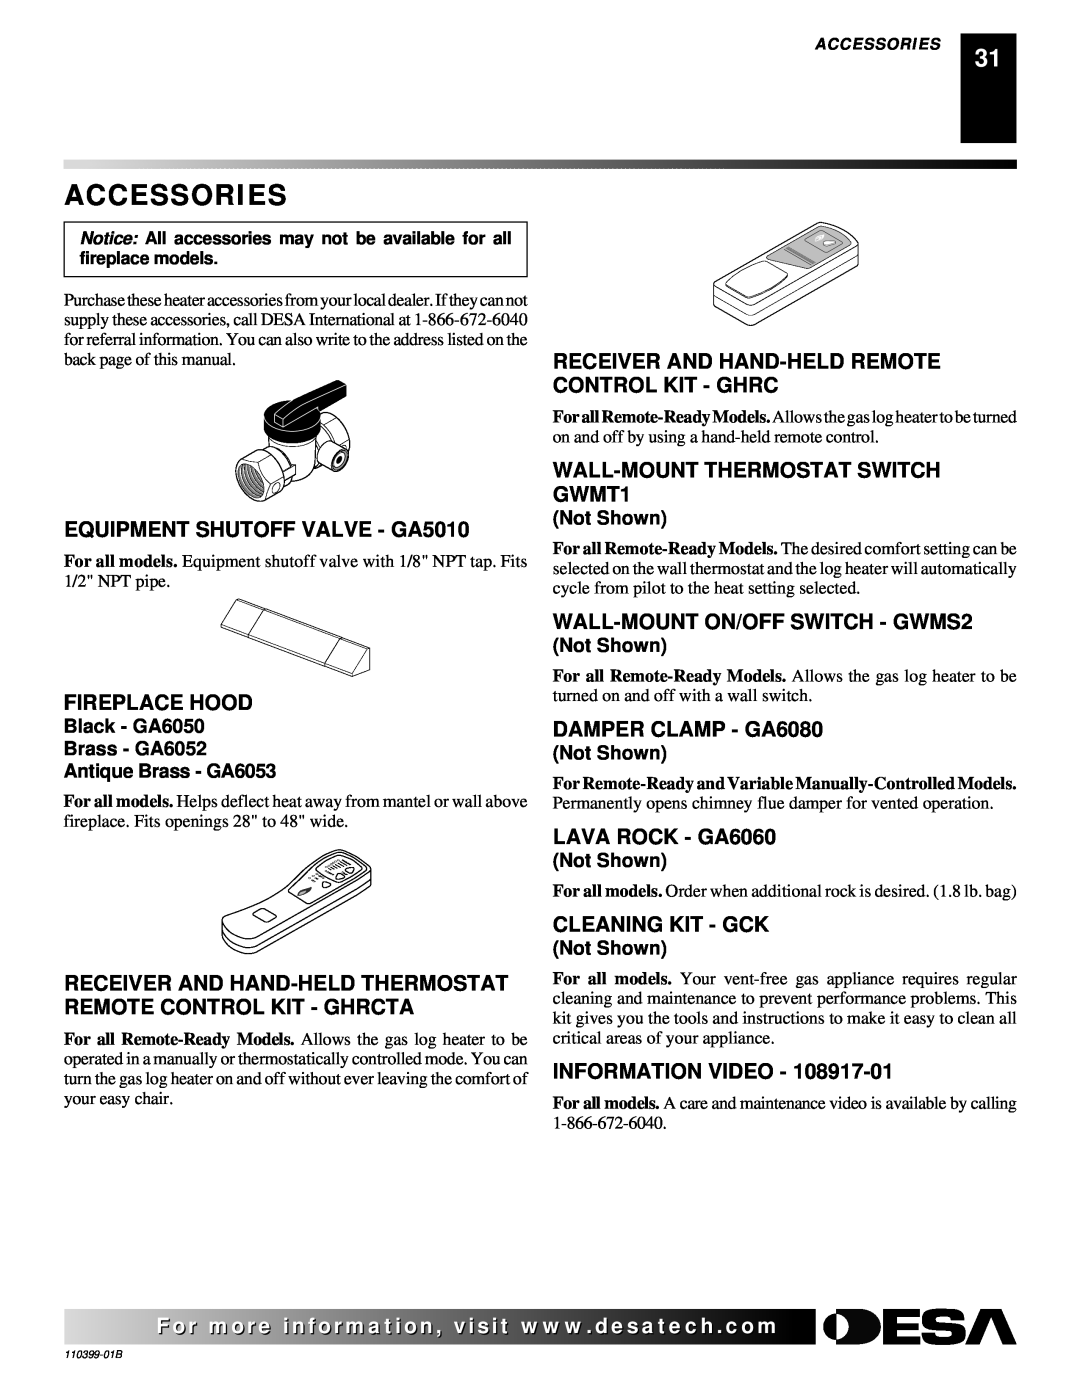 Desa LAME-MAX Golden Oak Accessories, EQUIPMENT SHUTOFF VALVE - GA5010, Receiver And Hand-Heldremote Control Kit - Ghrc 